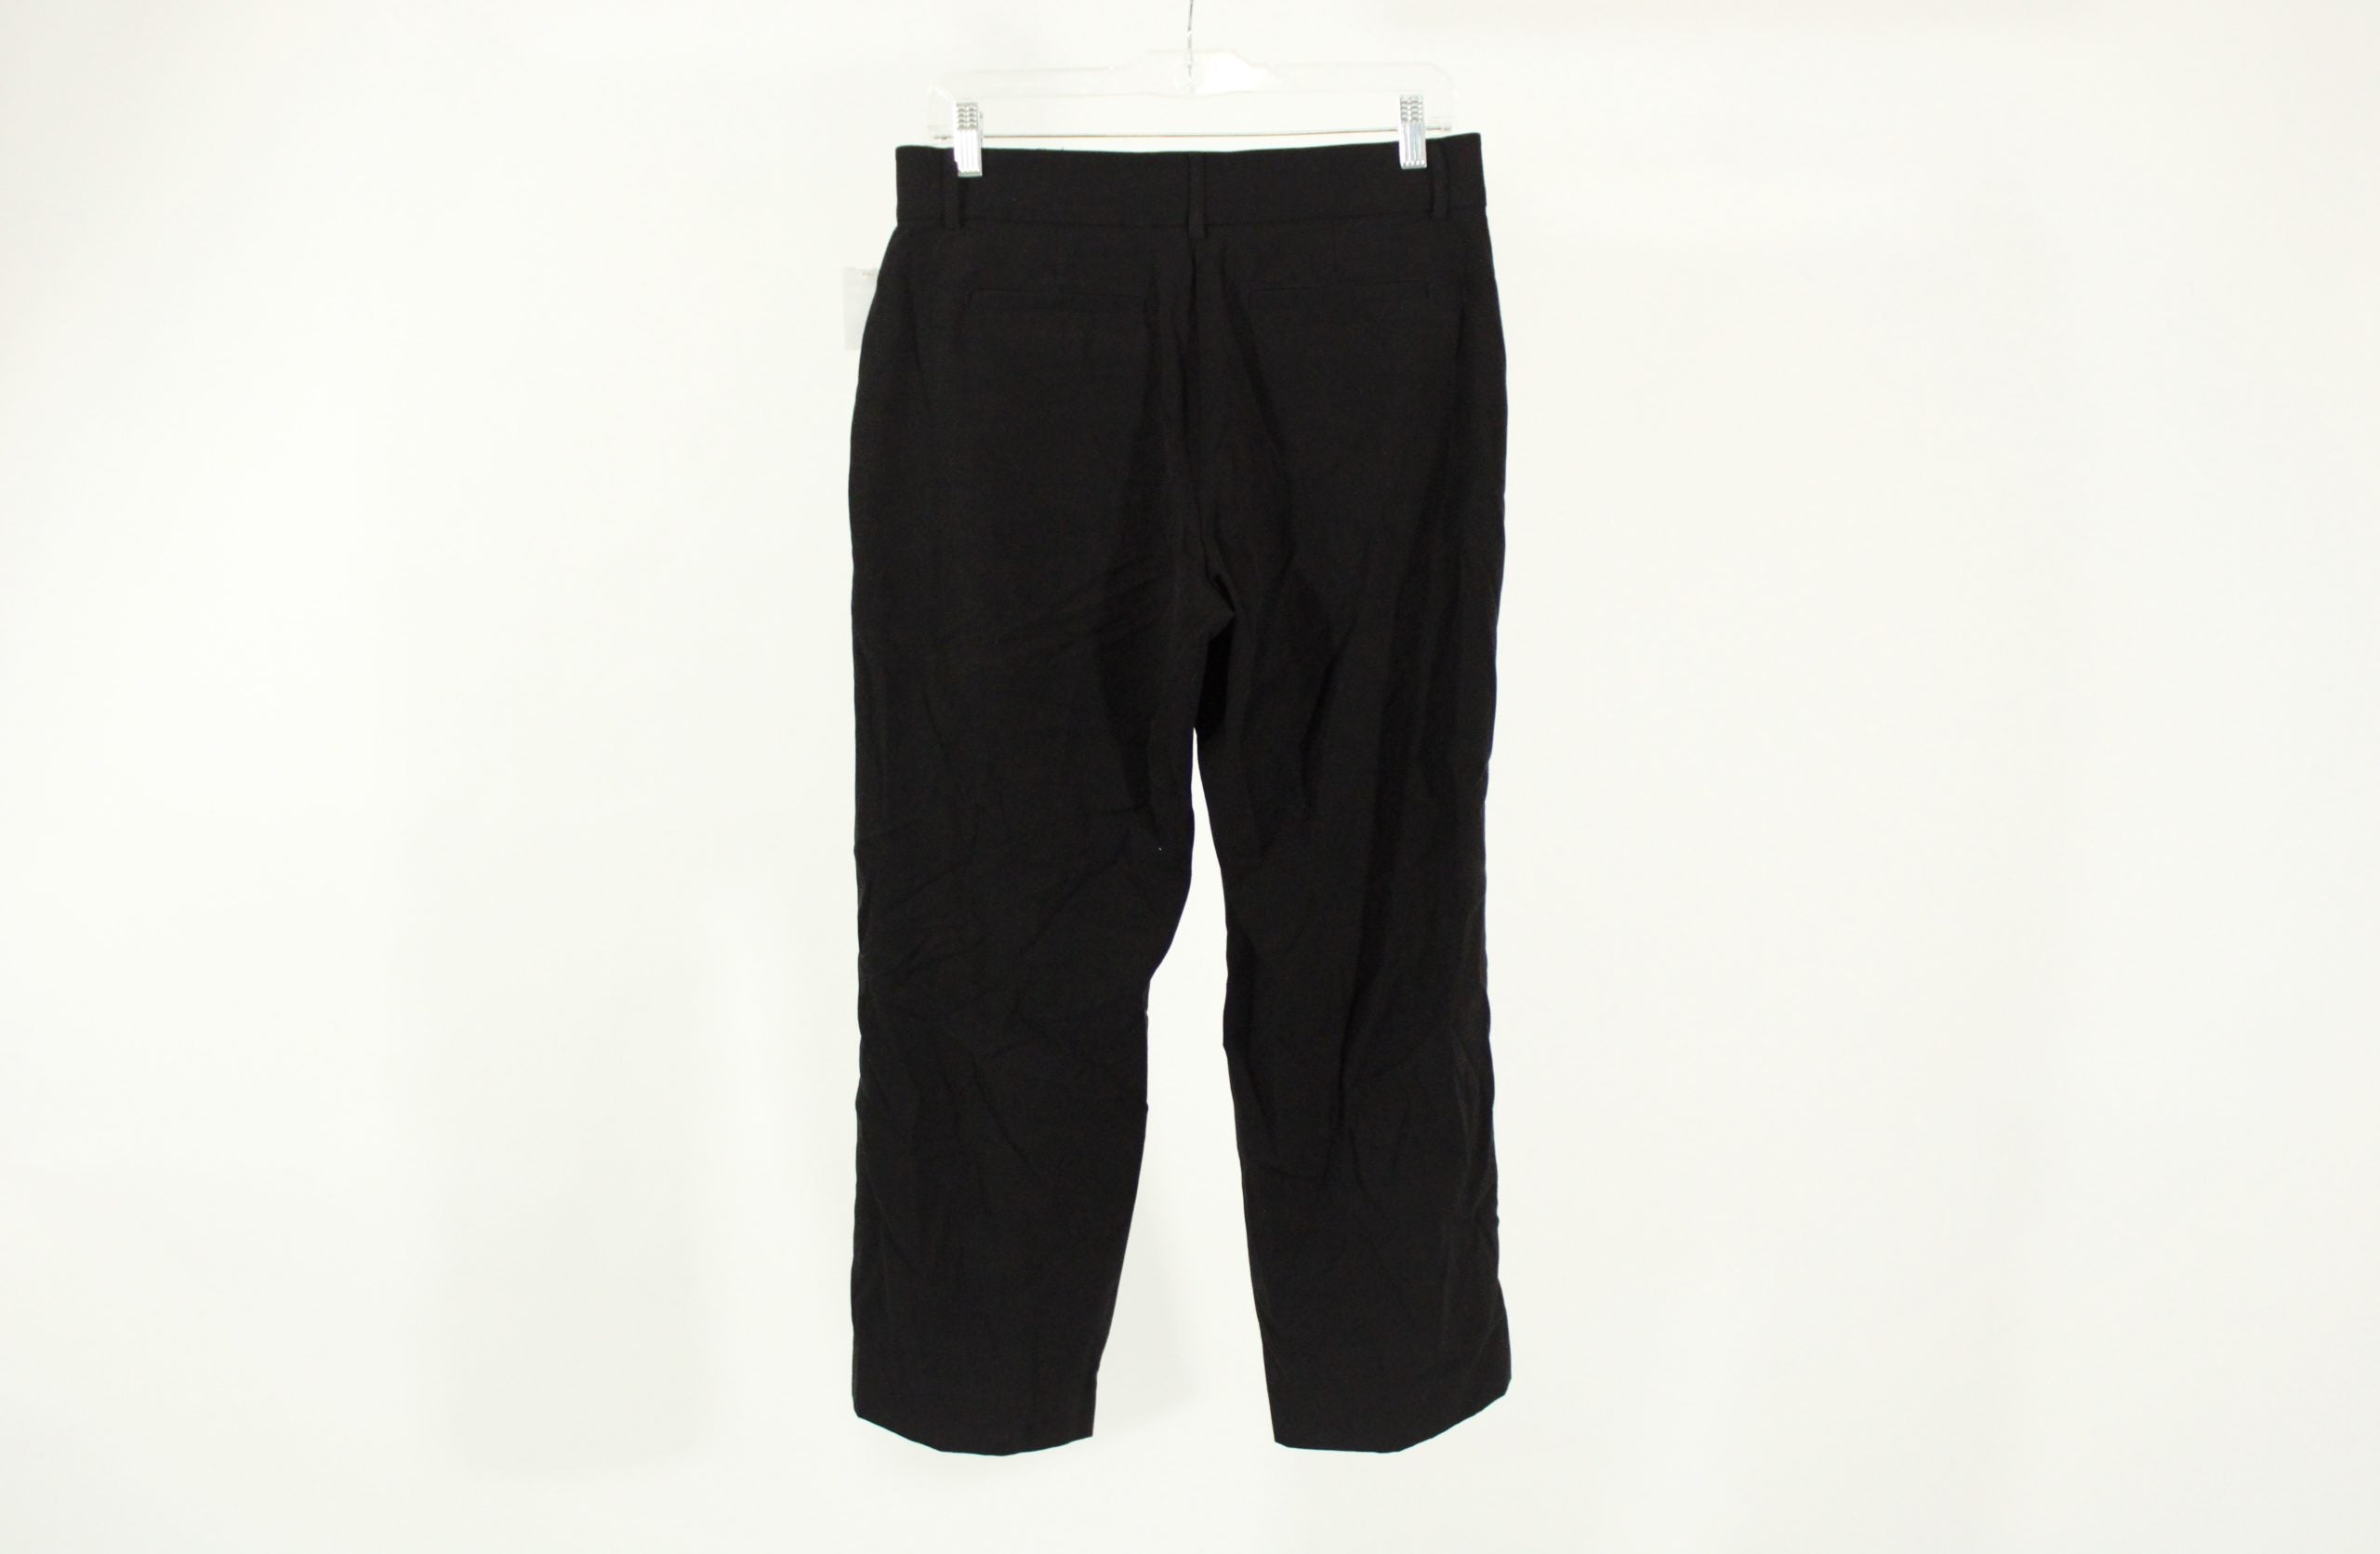 Briggs Black Crop Pants | Size 8 Petite